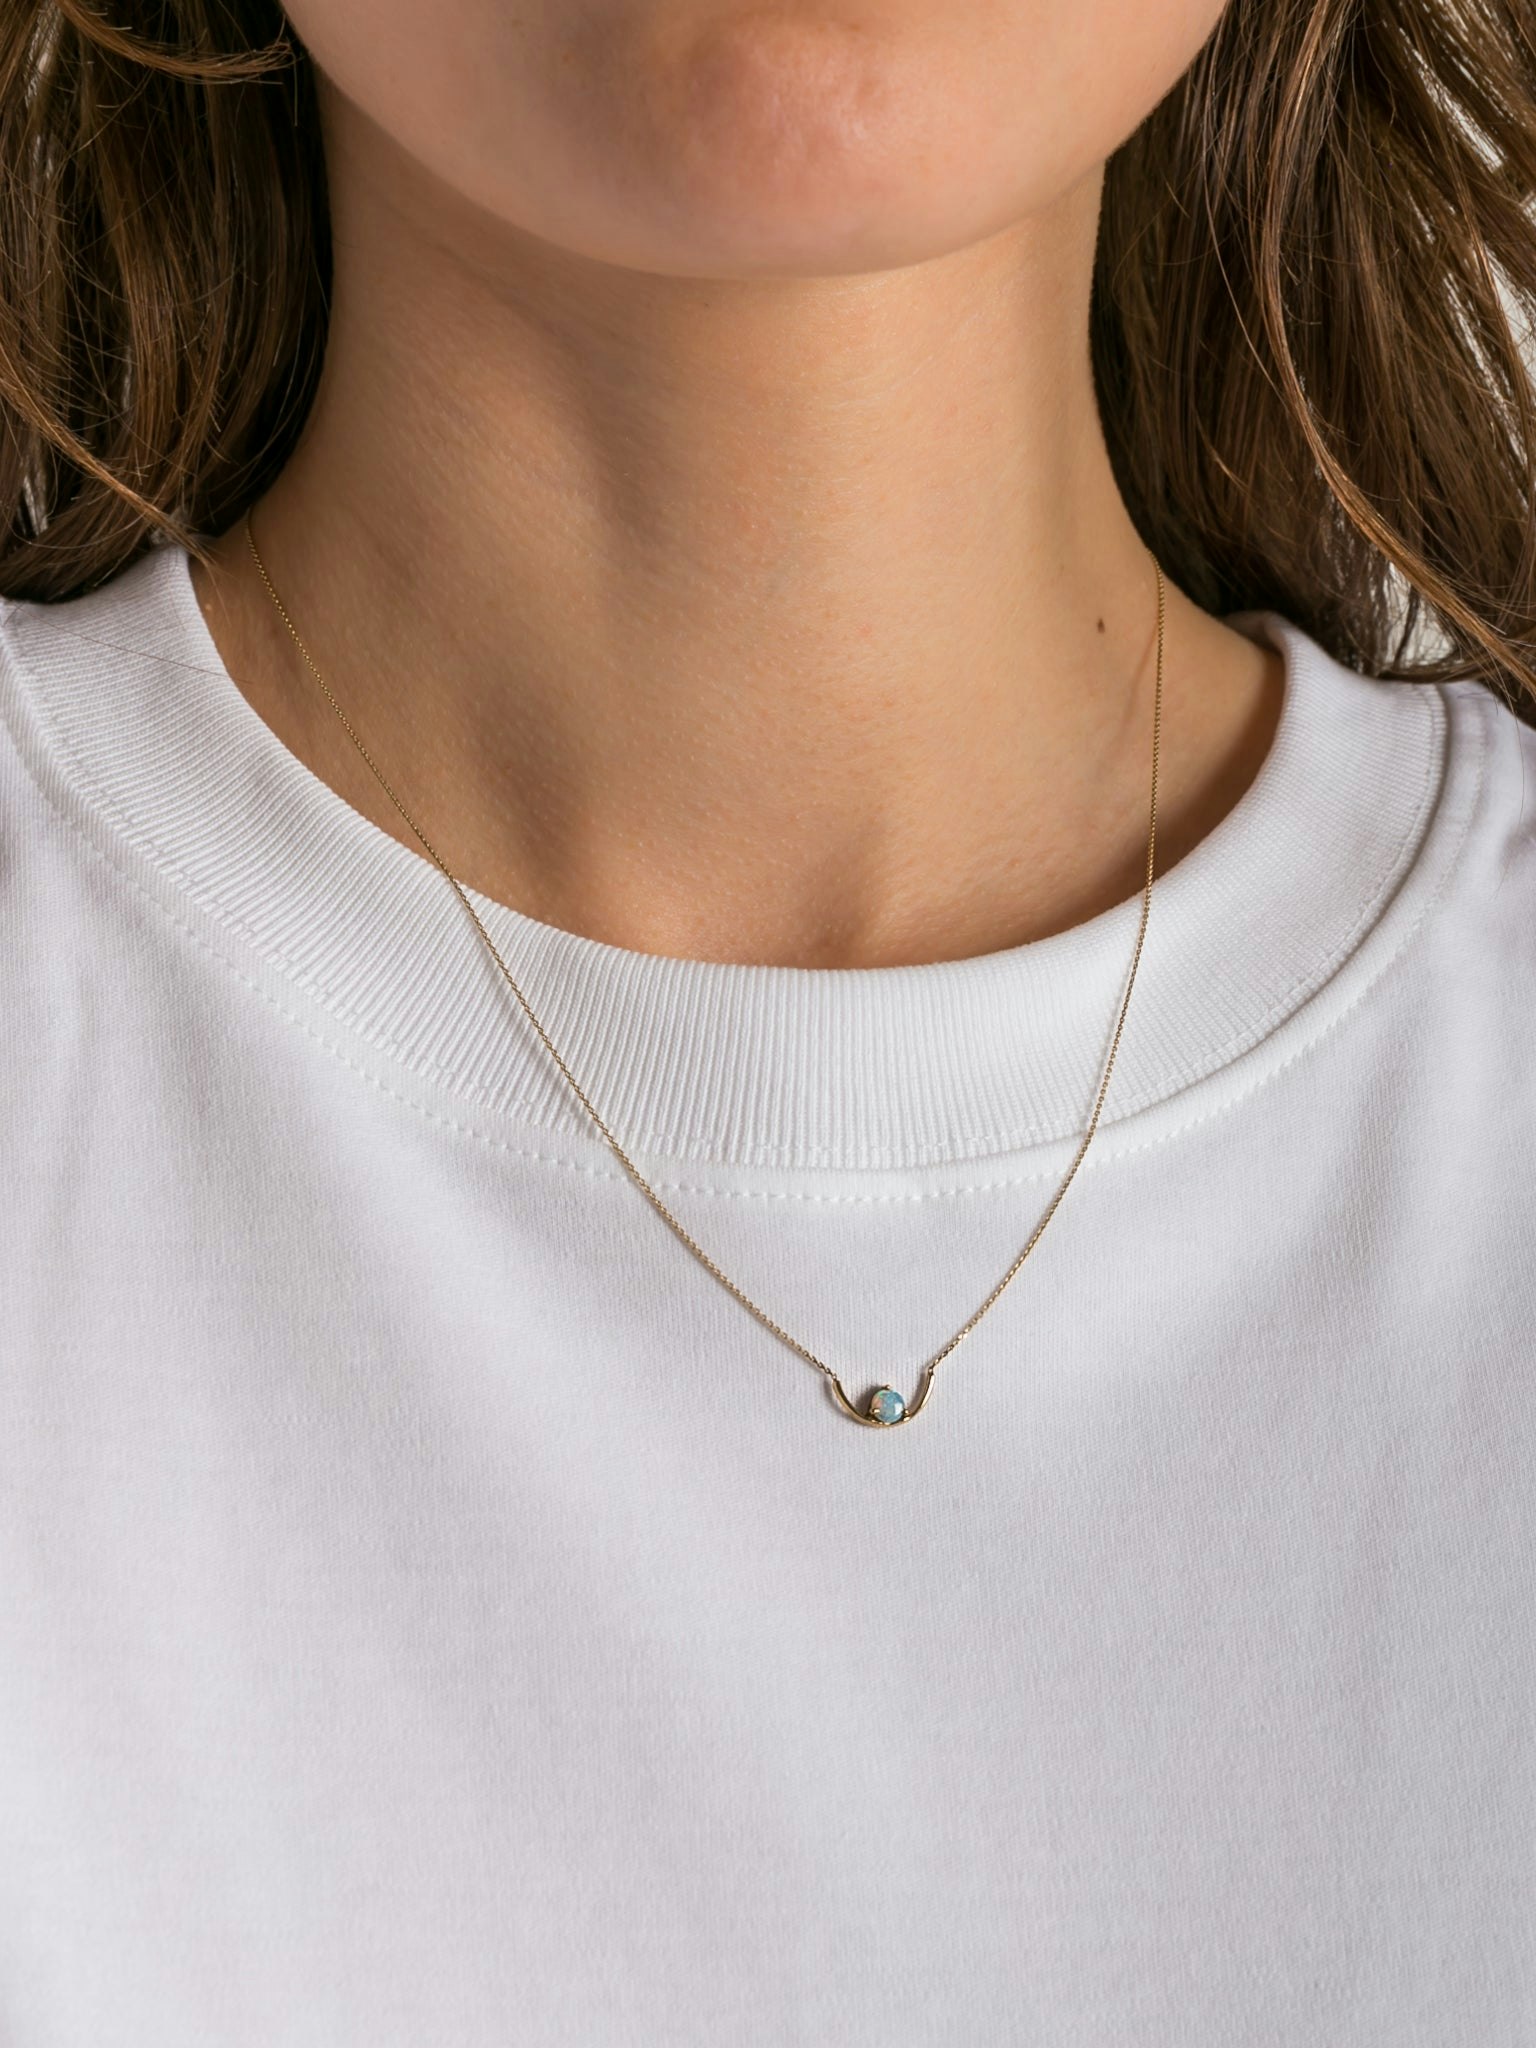 Opal arc necklace photo 2